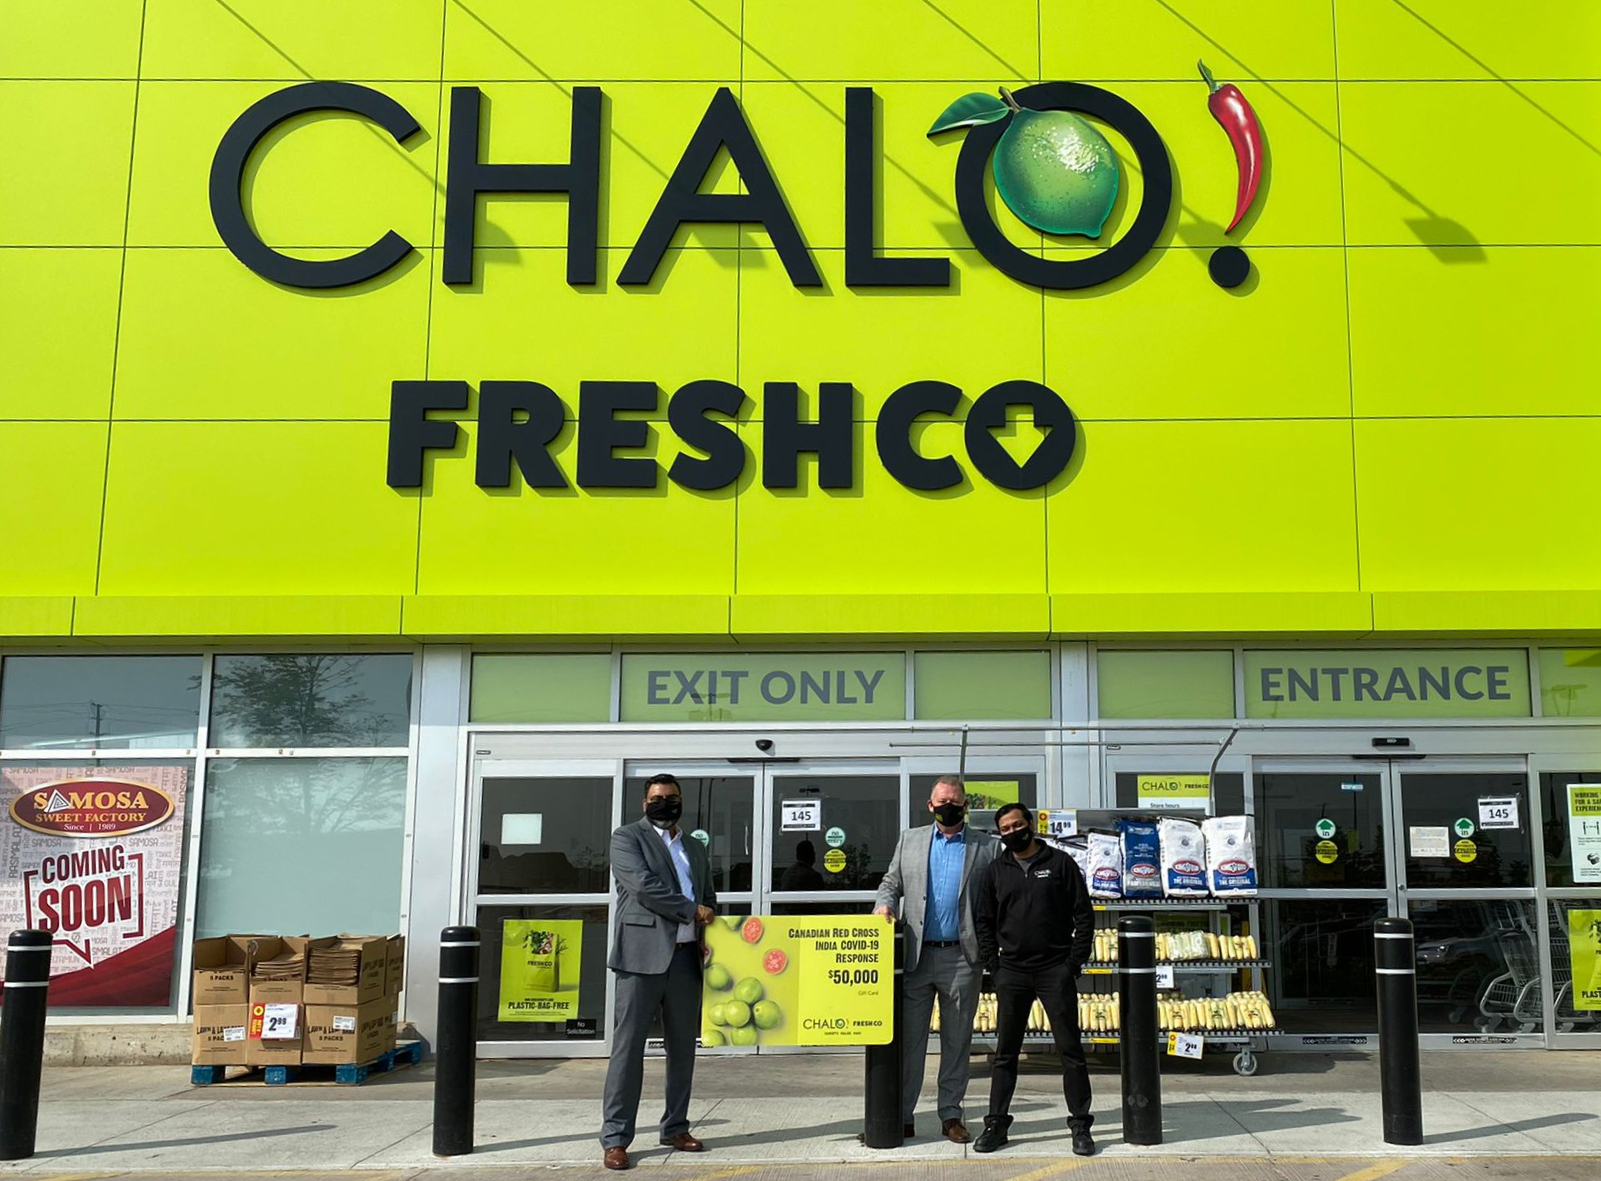 FreshCo & Chalo! FreshCo donate $50,000 to Support India amid Covid-19 Crisis